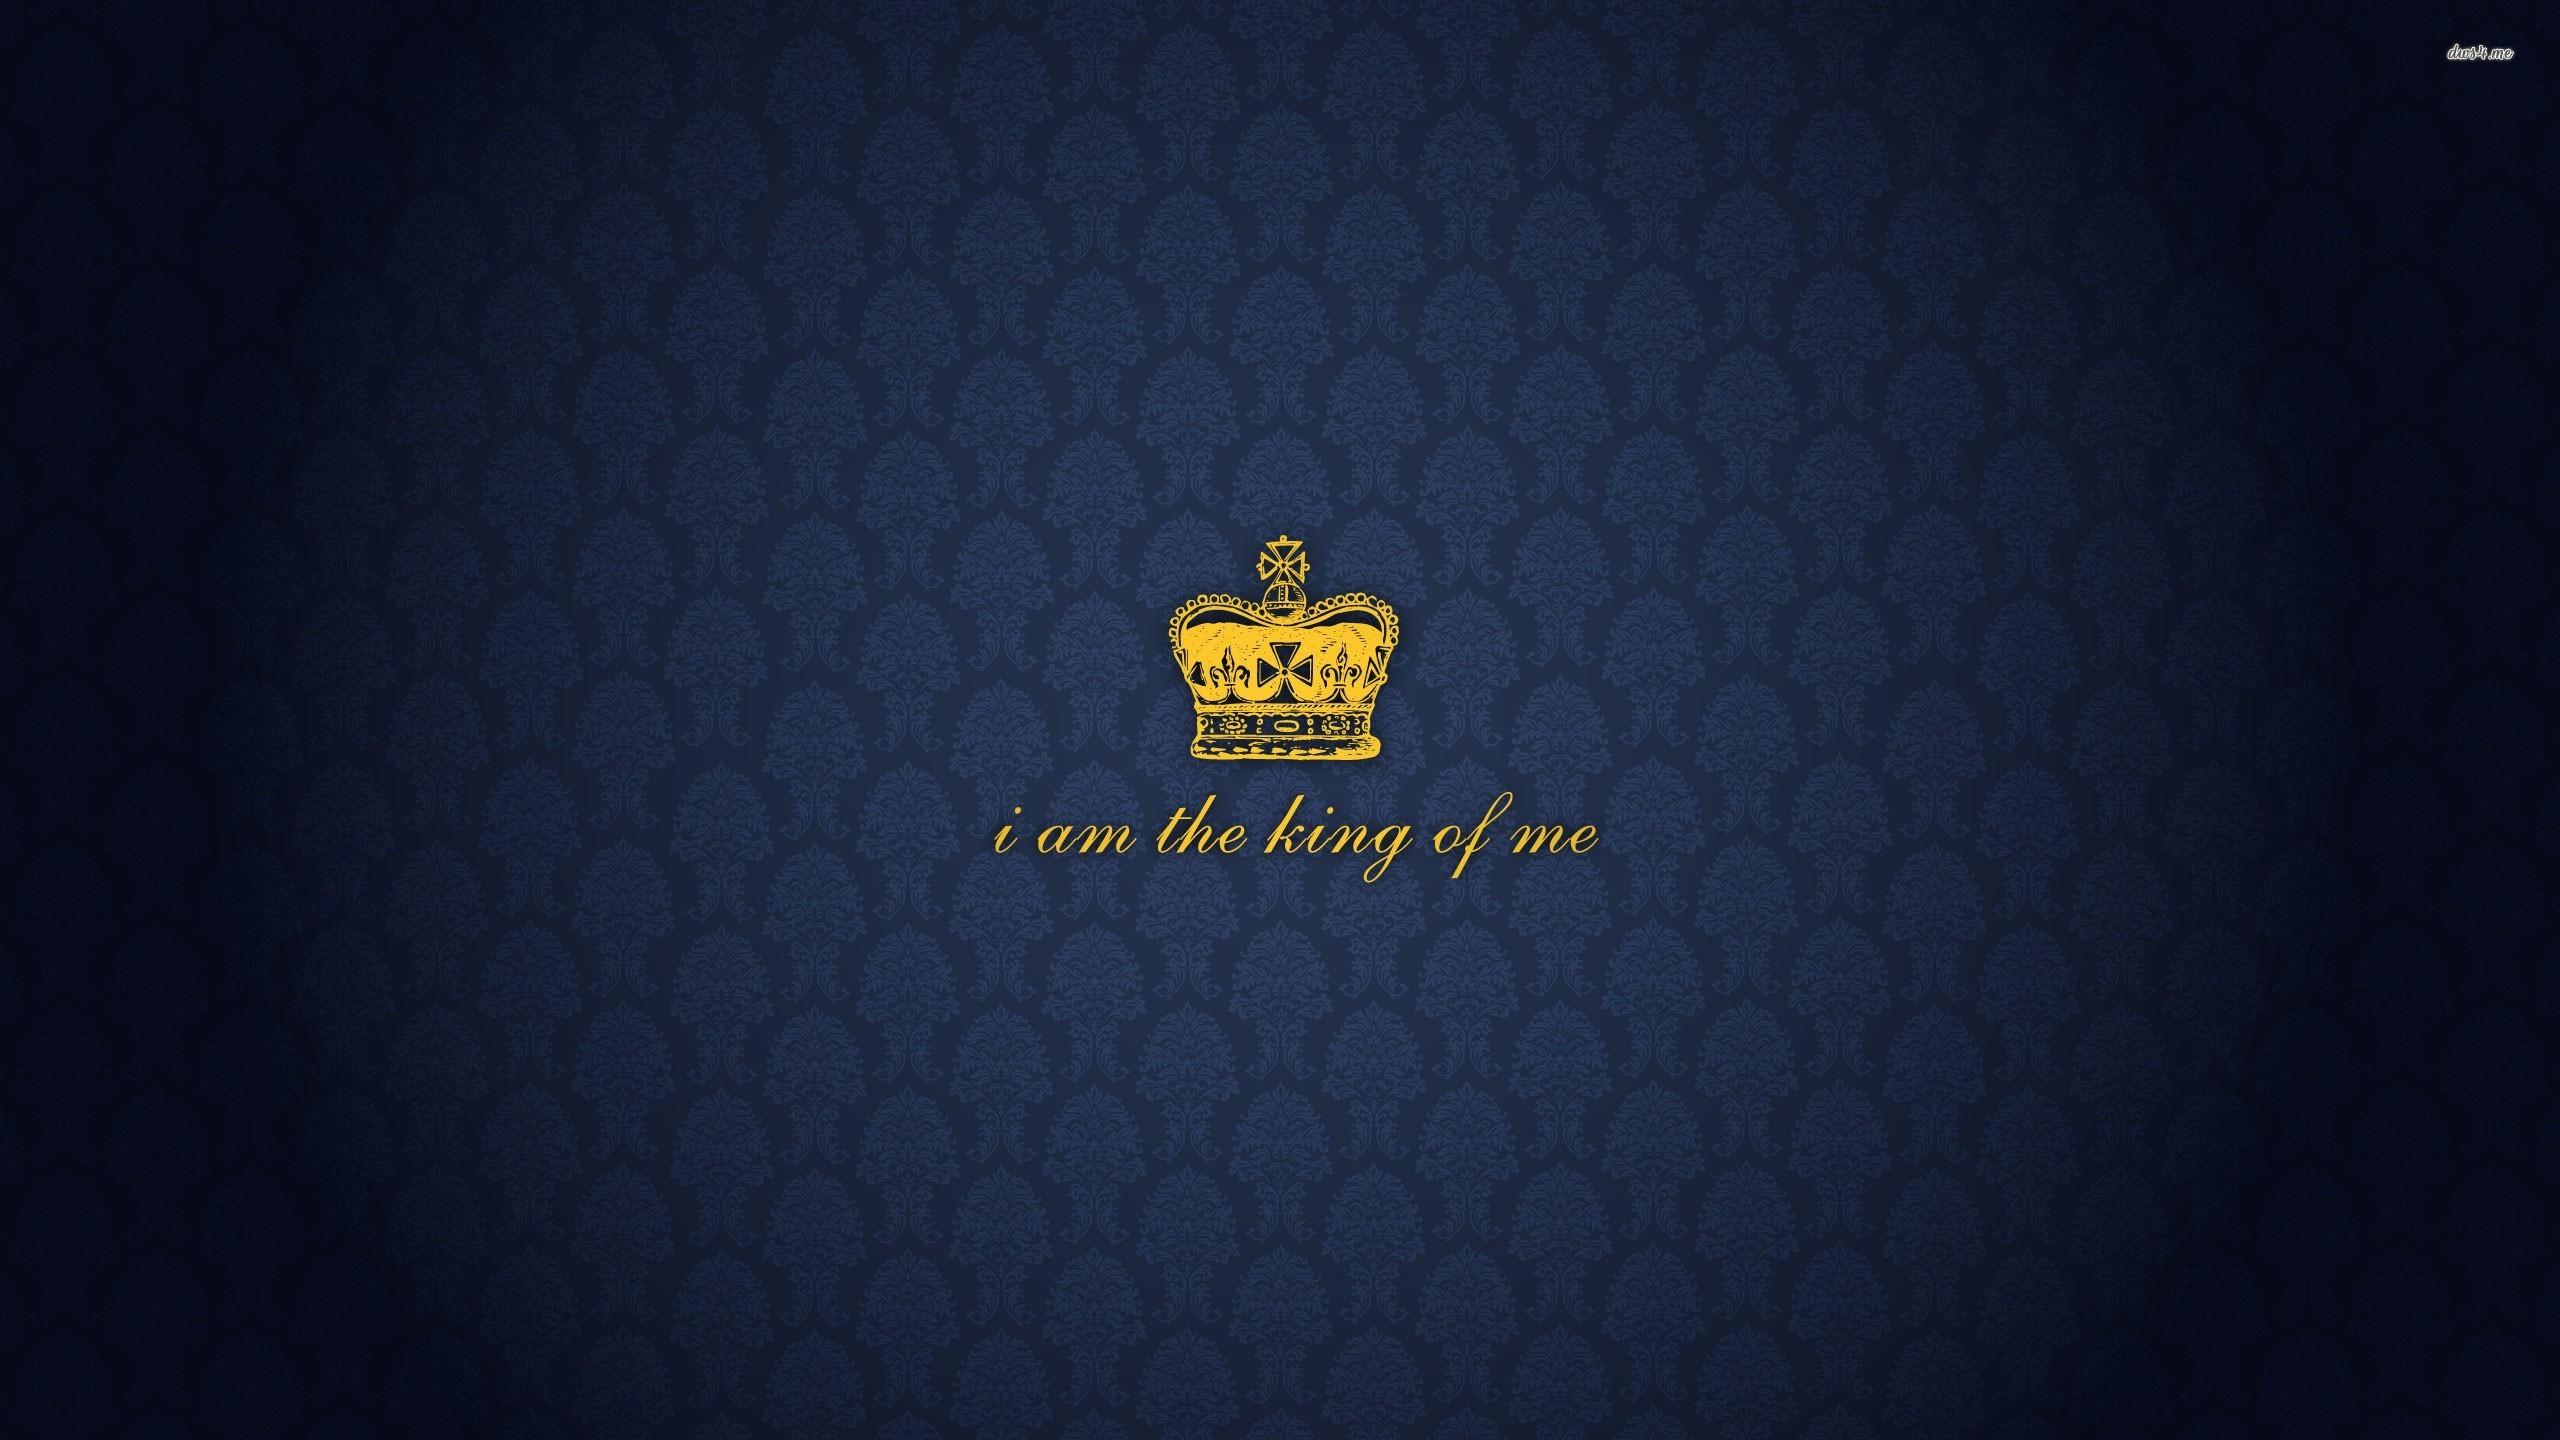 I am the king of me wallpaper wallpaper